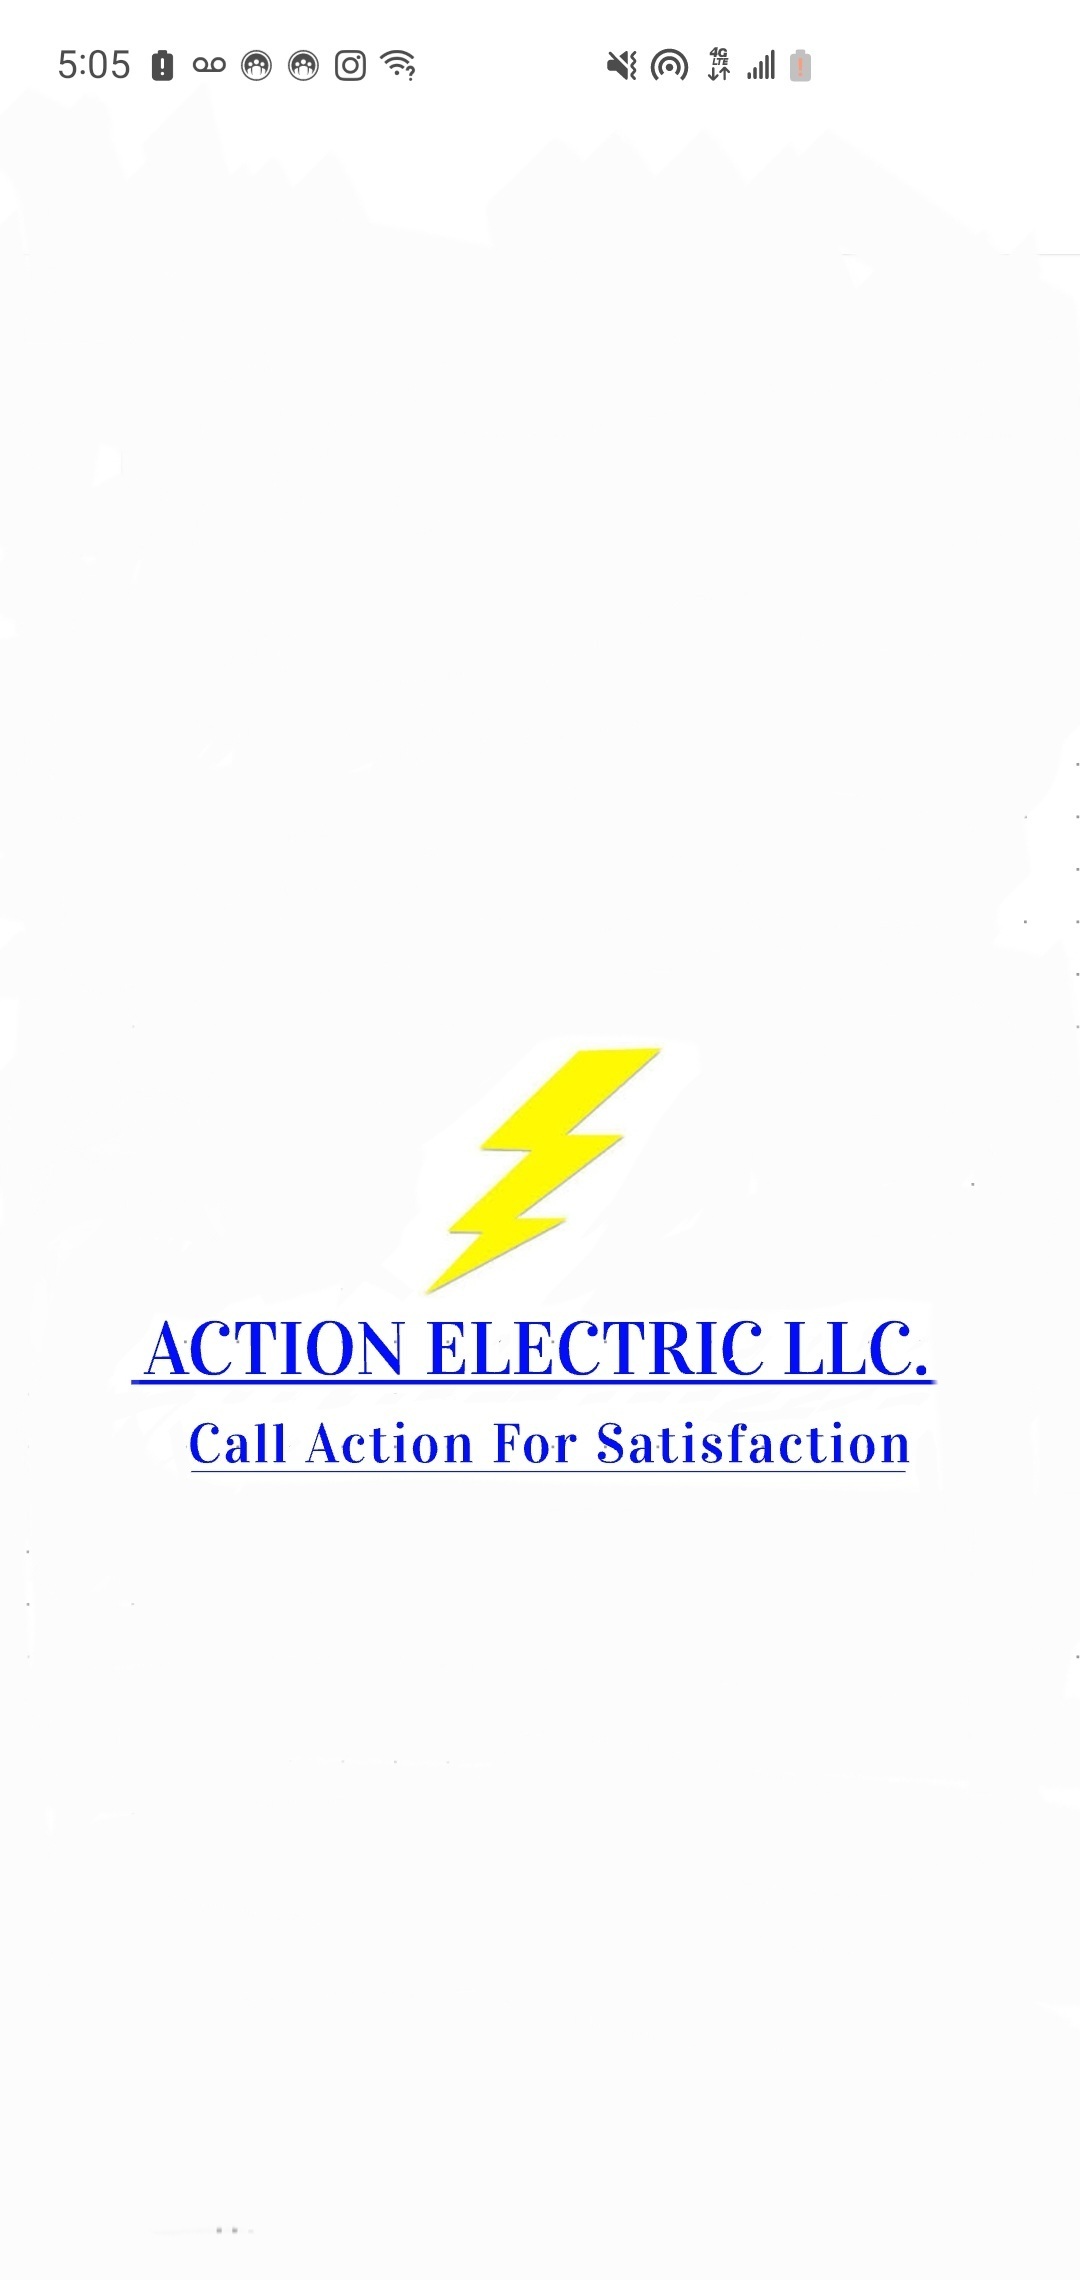 Action Electric LLC Logo